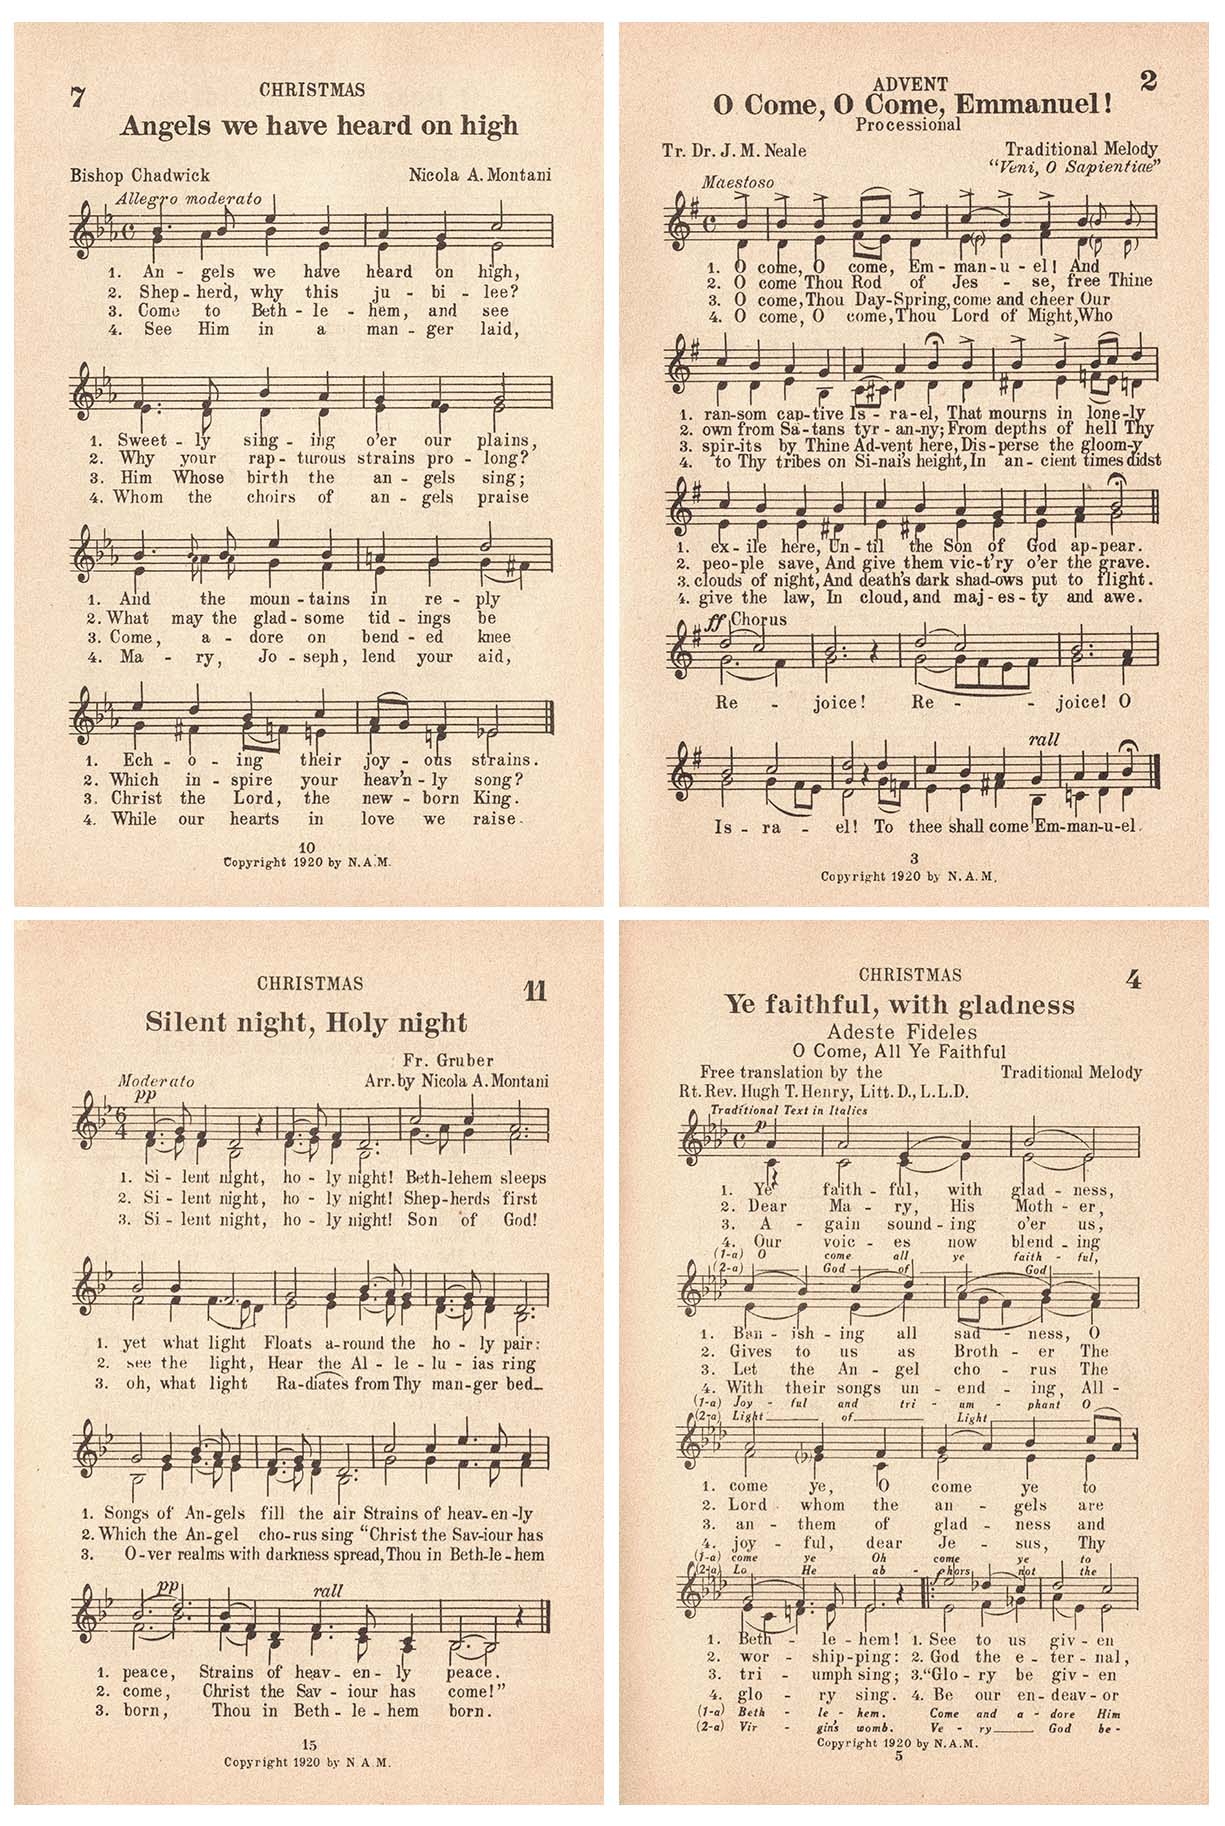 Free Printable Vintage Christmas Sheet Music Hymns Rose Clearfield - Christmas Carols Sheet Music Free Printable